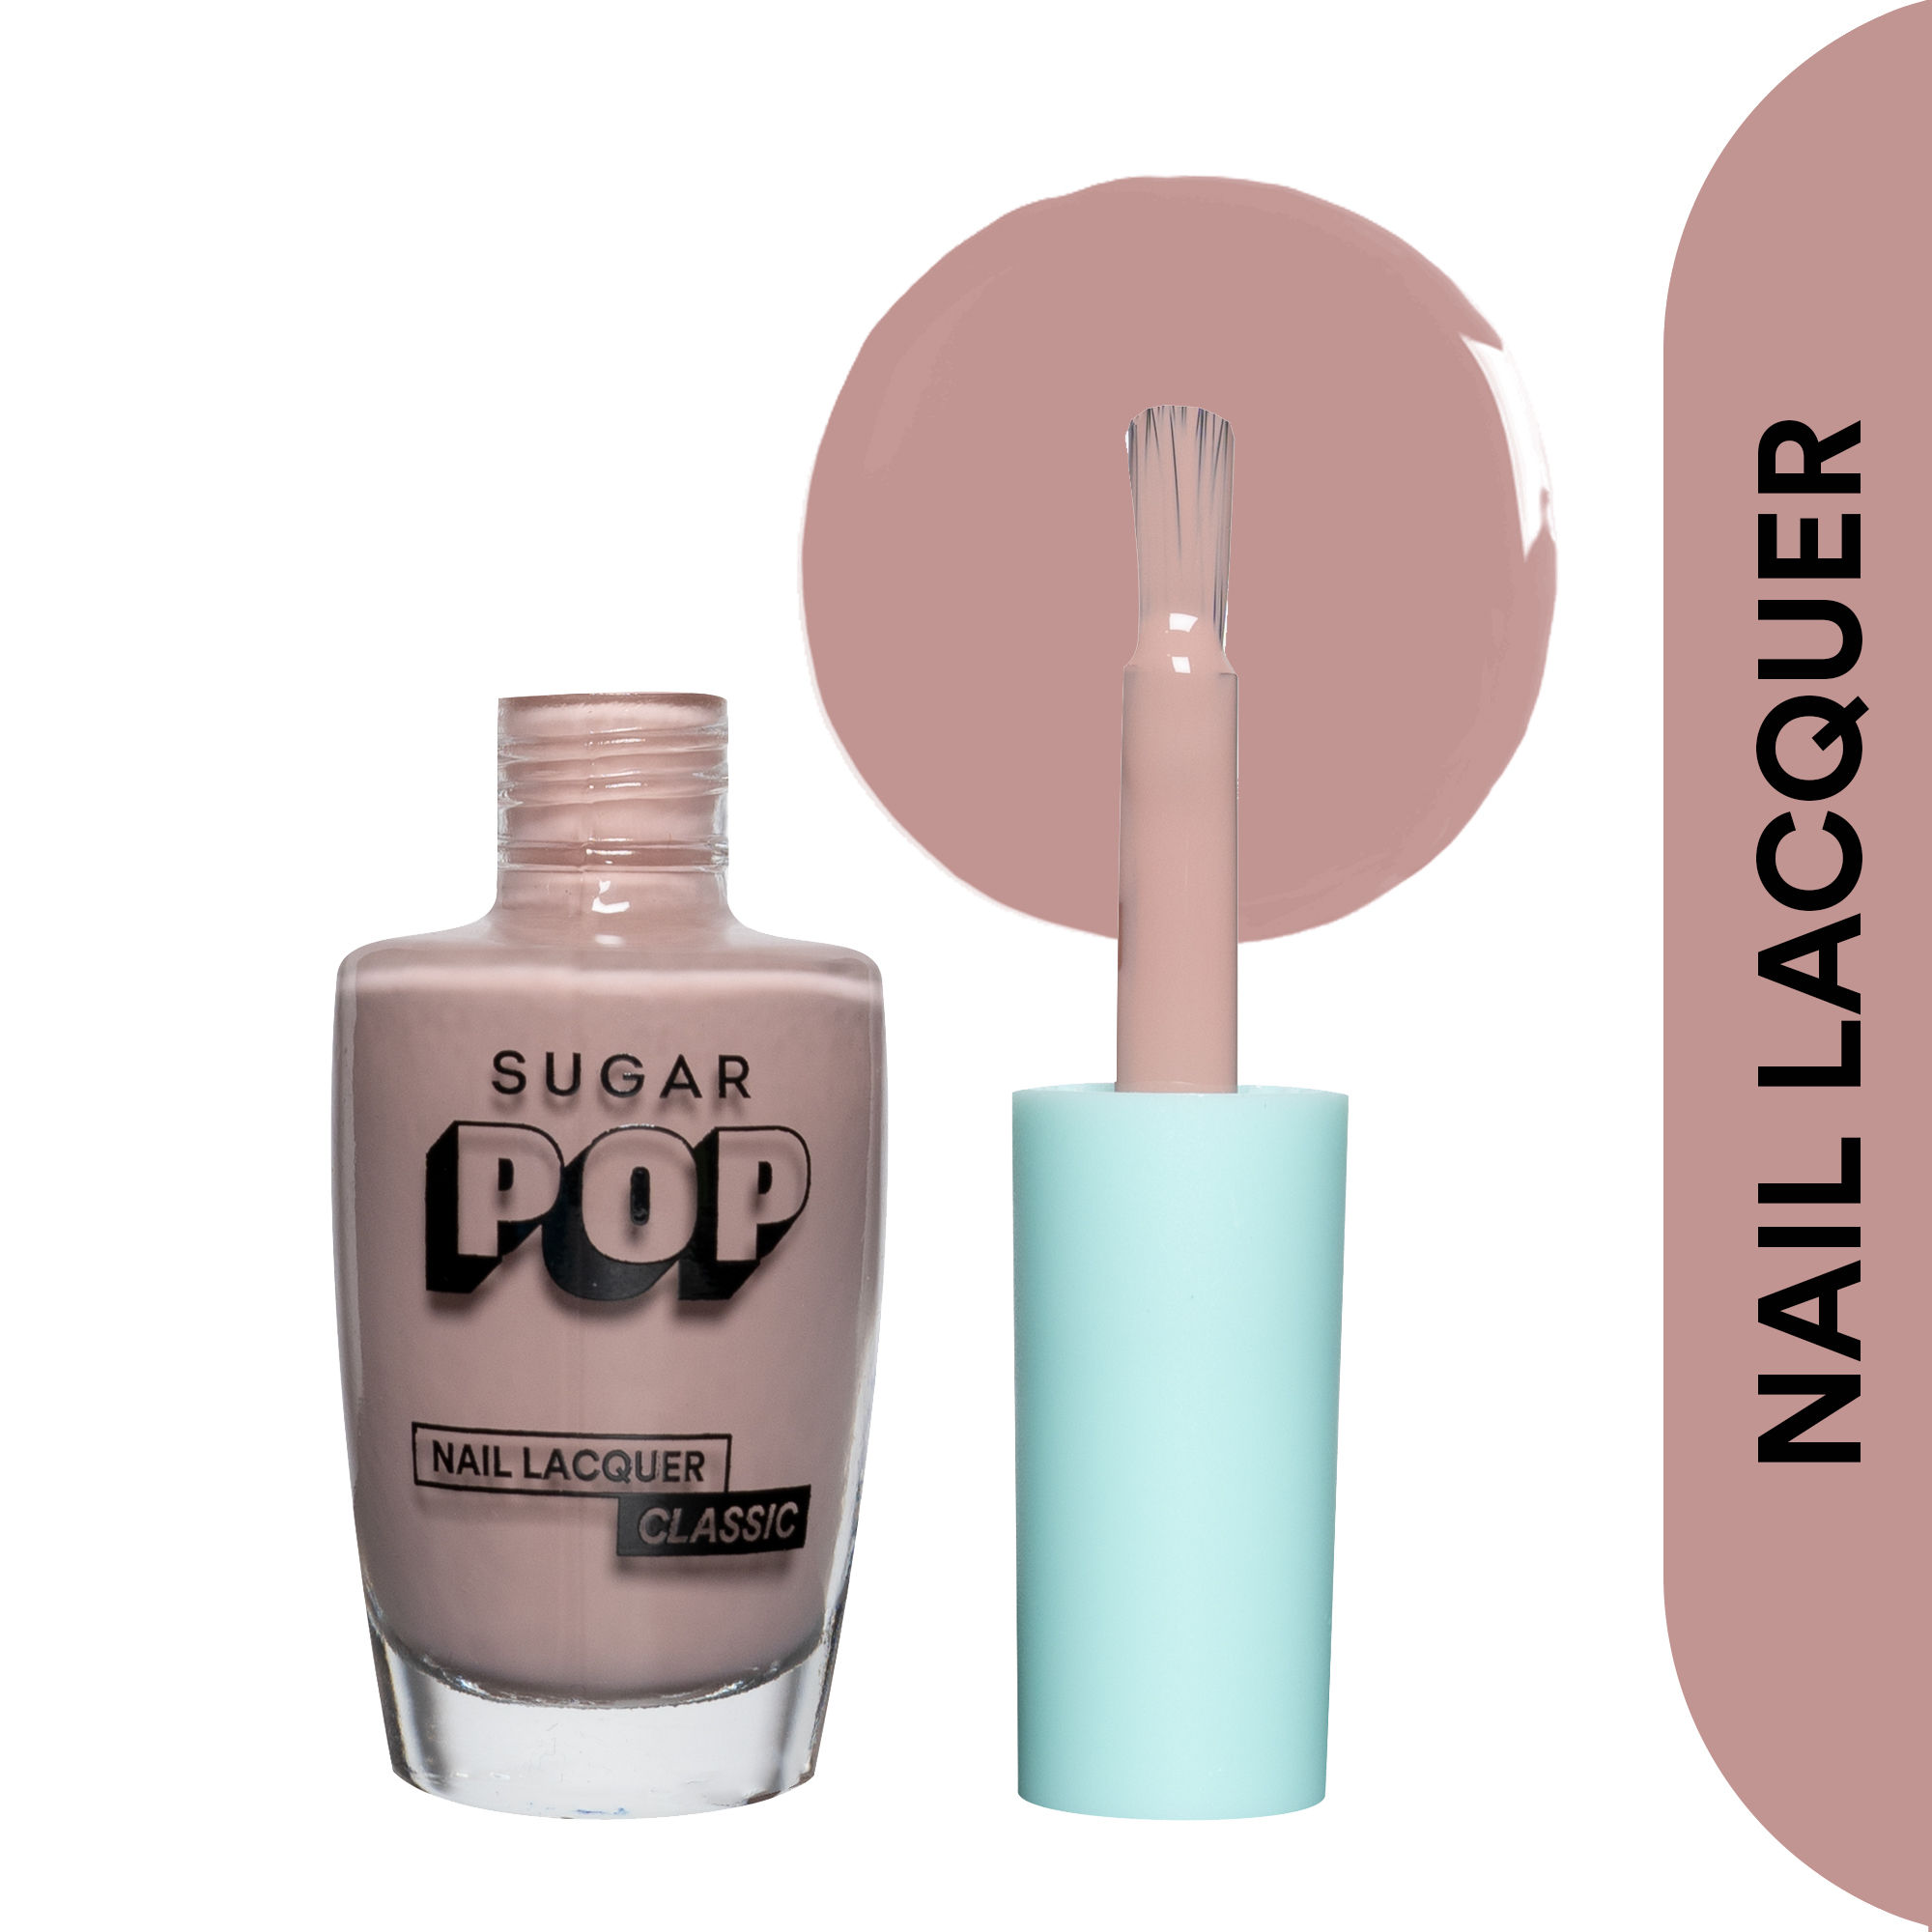 Explore 156+ sugar pop nail polish best